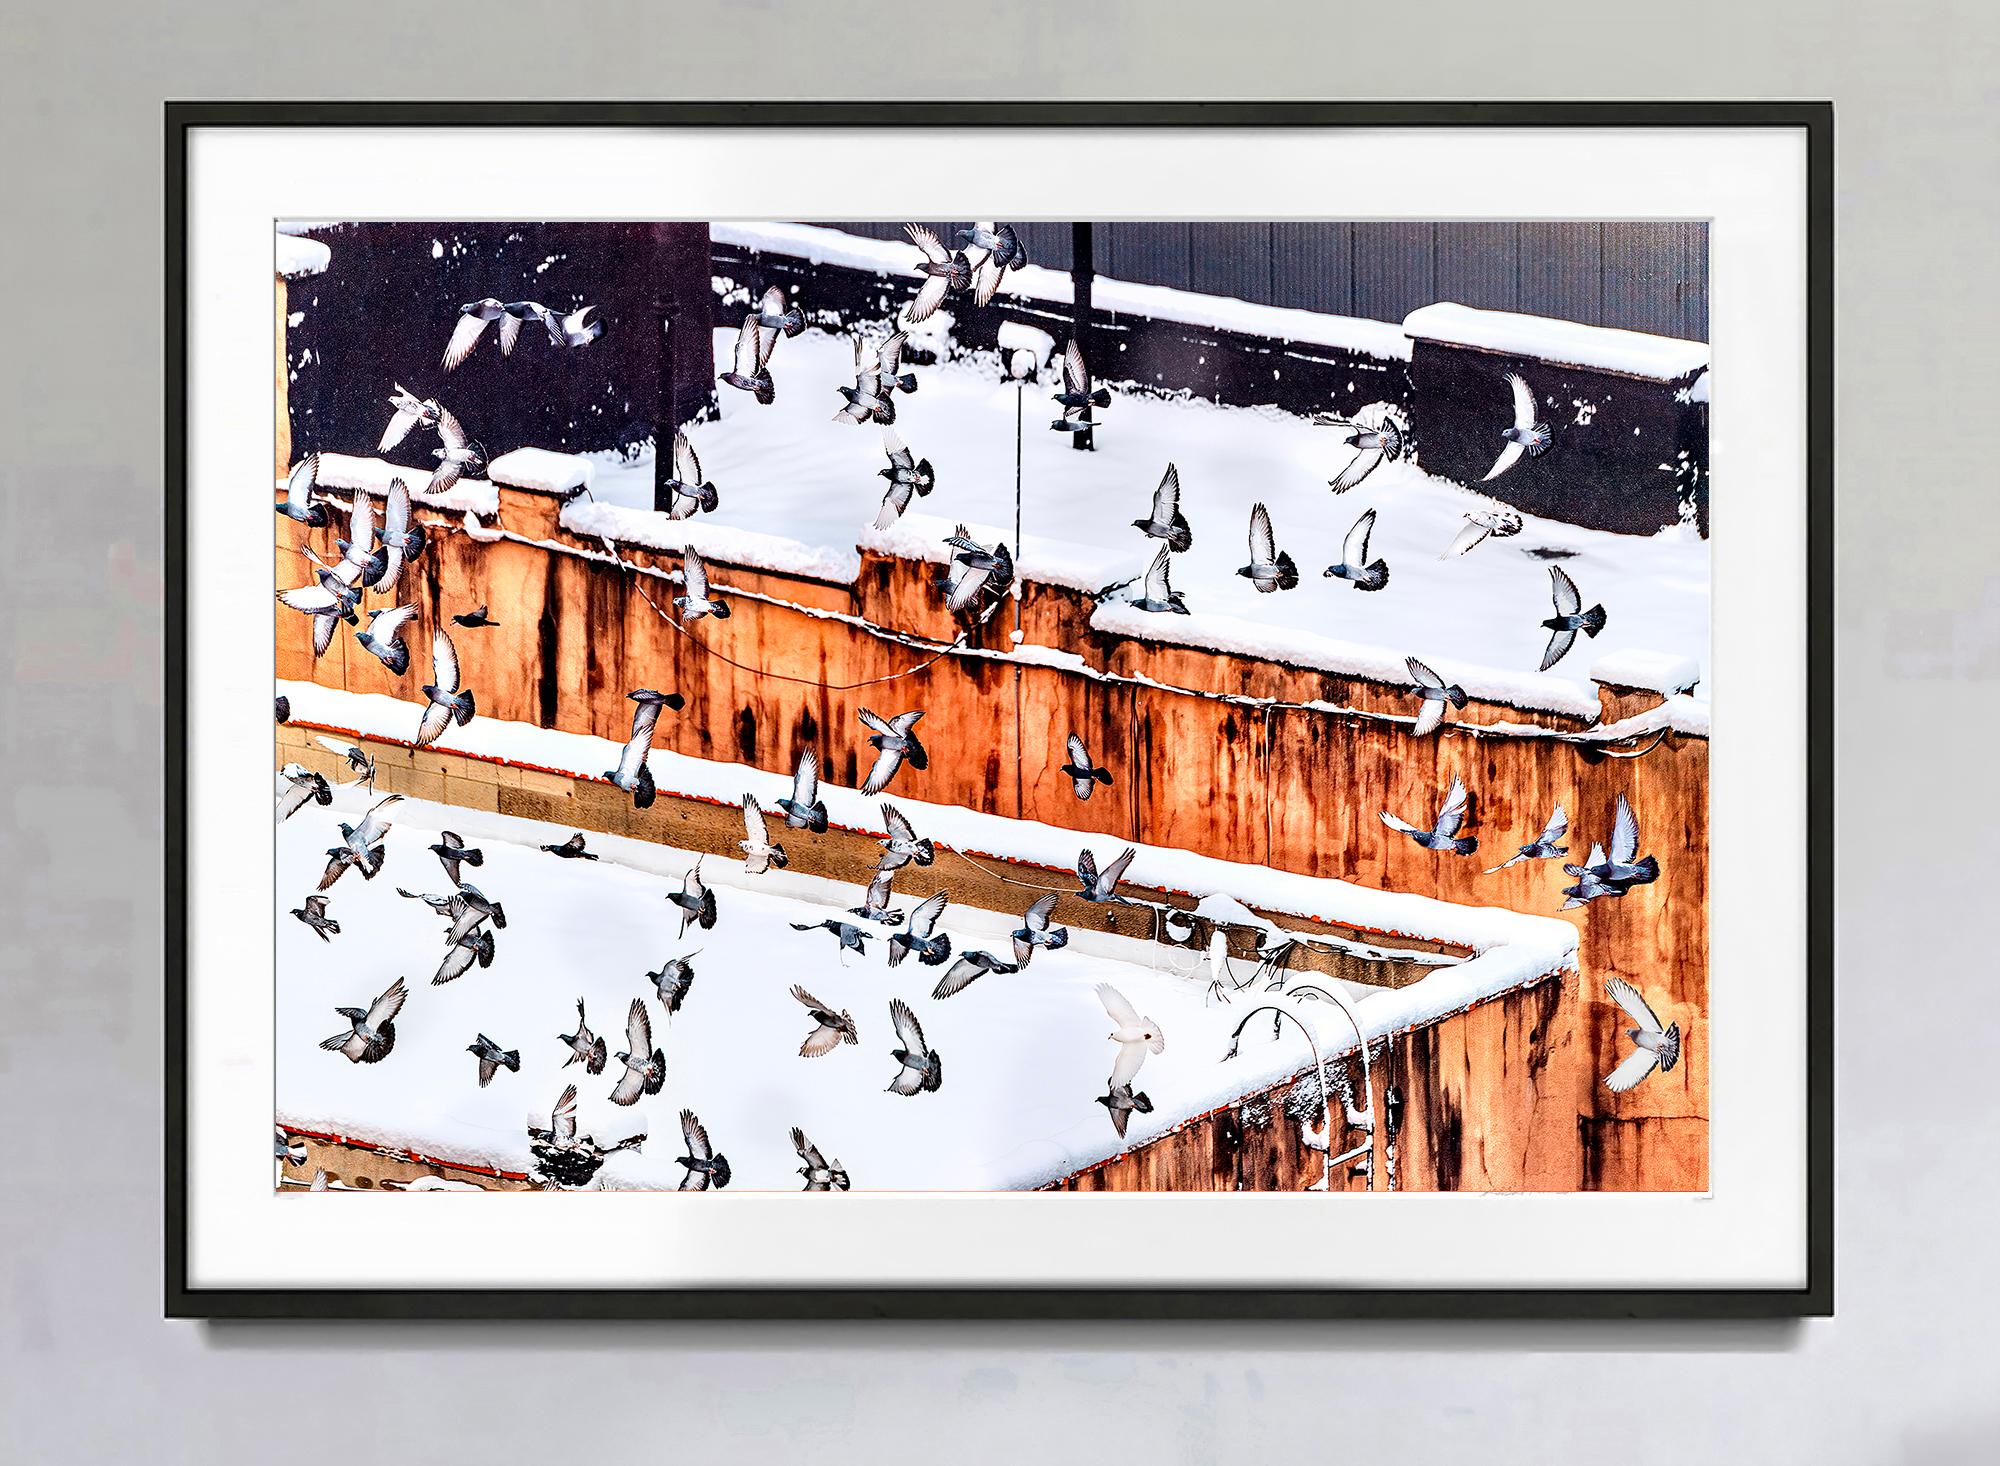 Flock of Birds over New York City Rooftops (Abstrakte Fotografie) – Photograph von Mitchell Funk